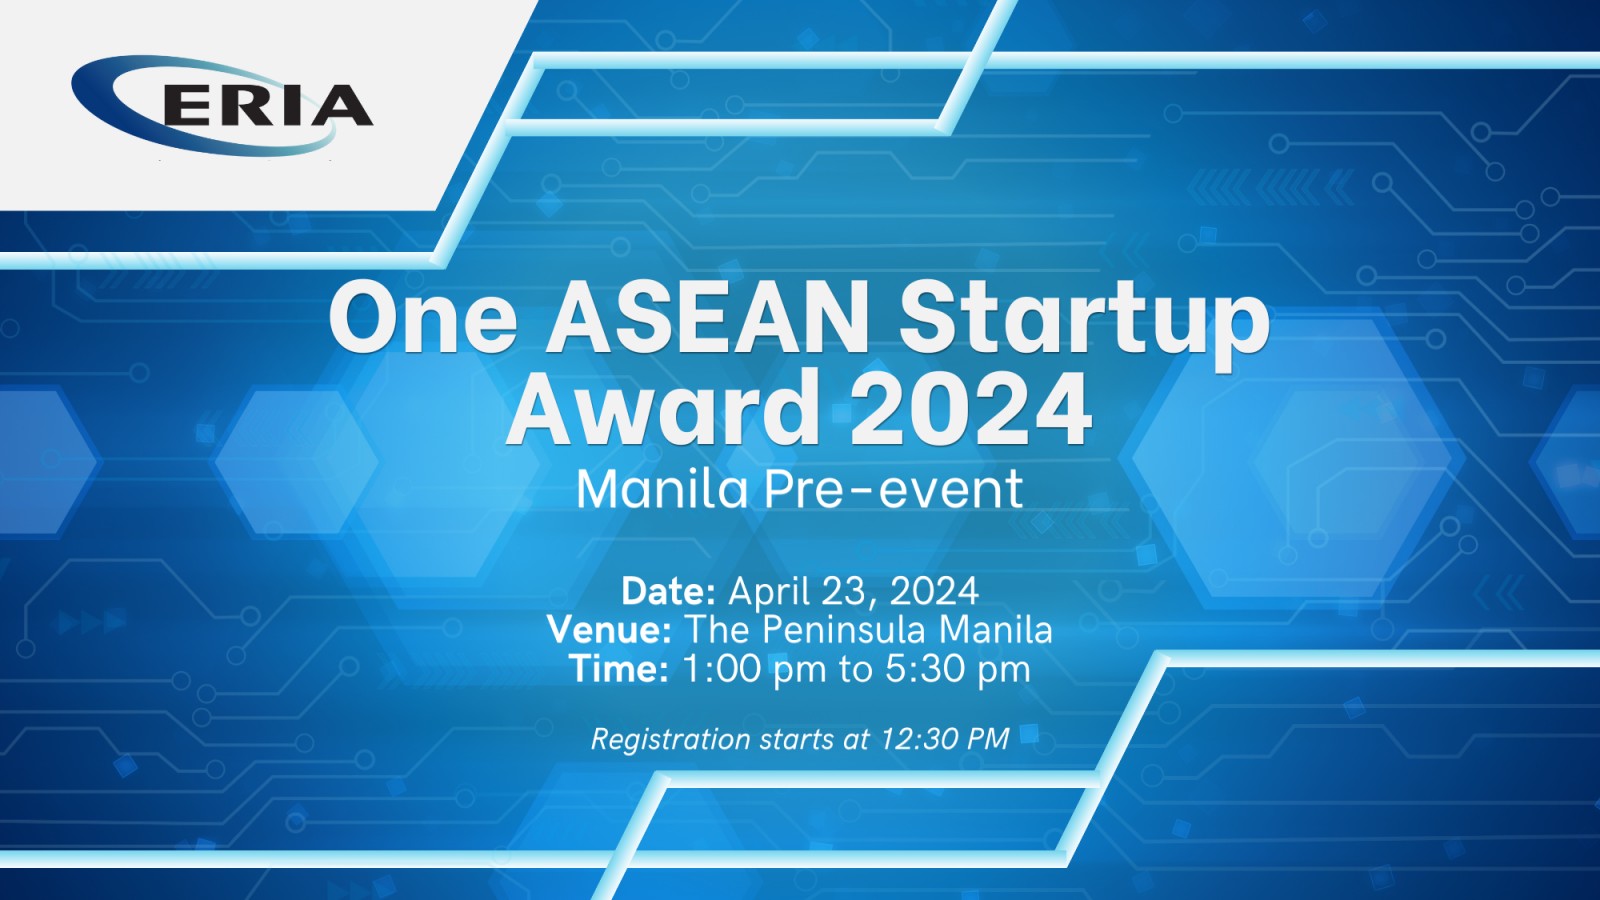 One ASEAN Startup Award 2024 Pre-event in Manila